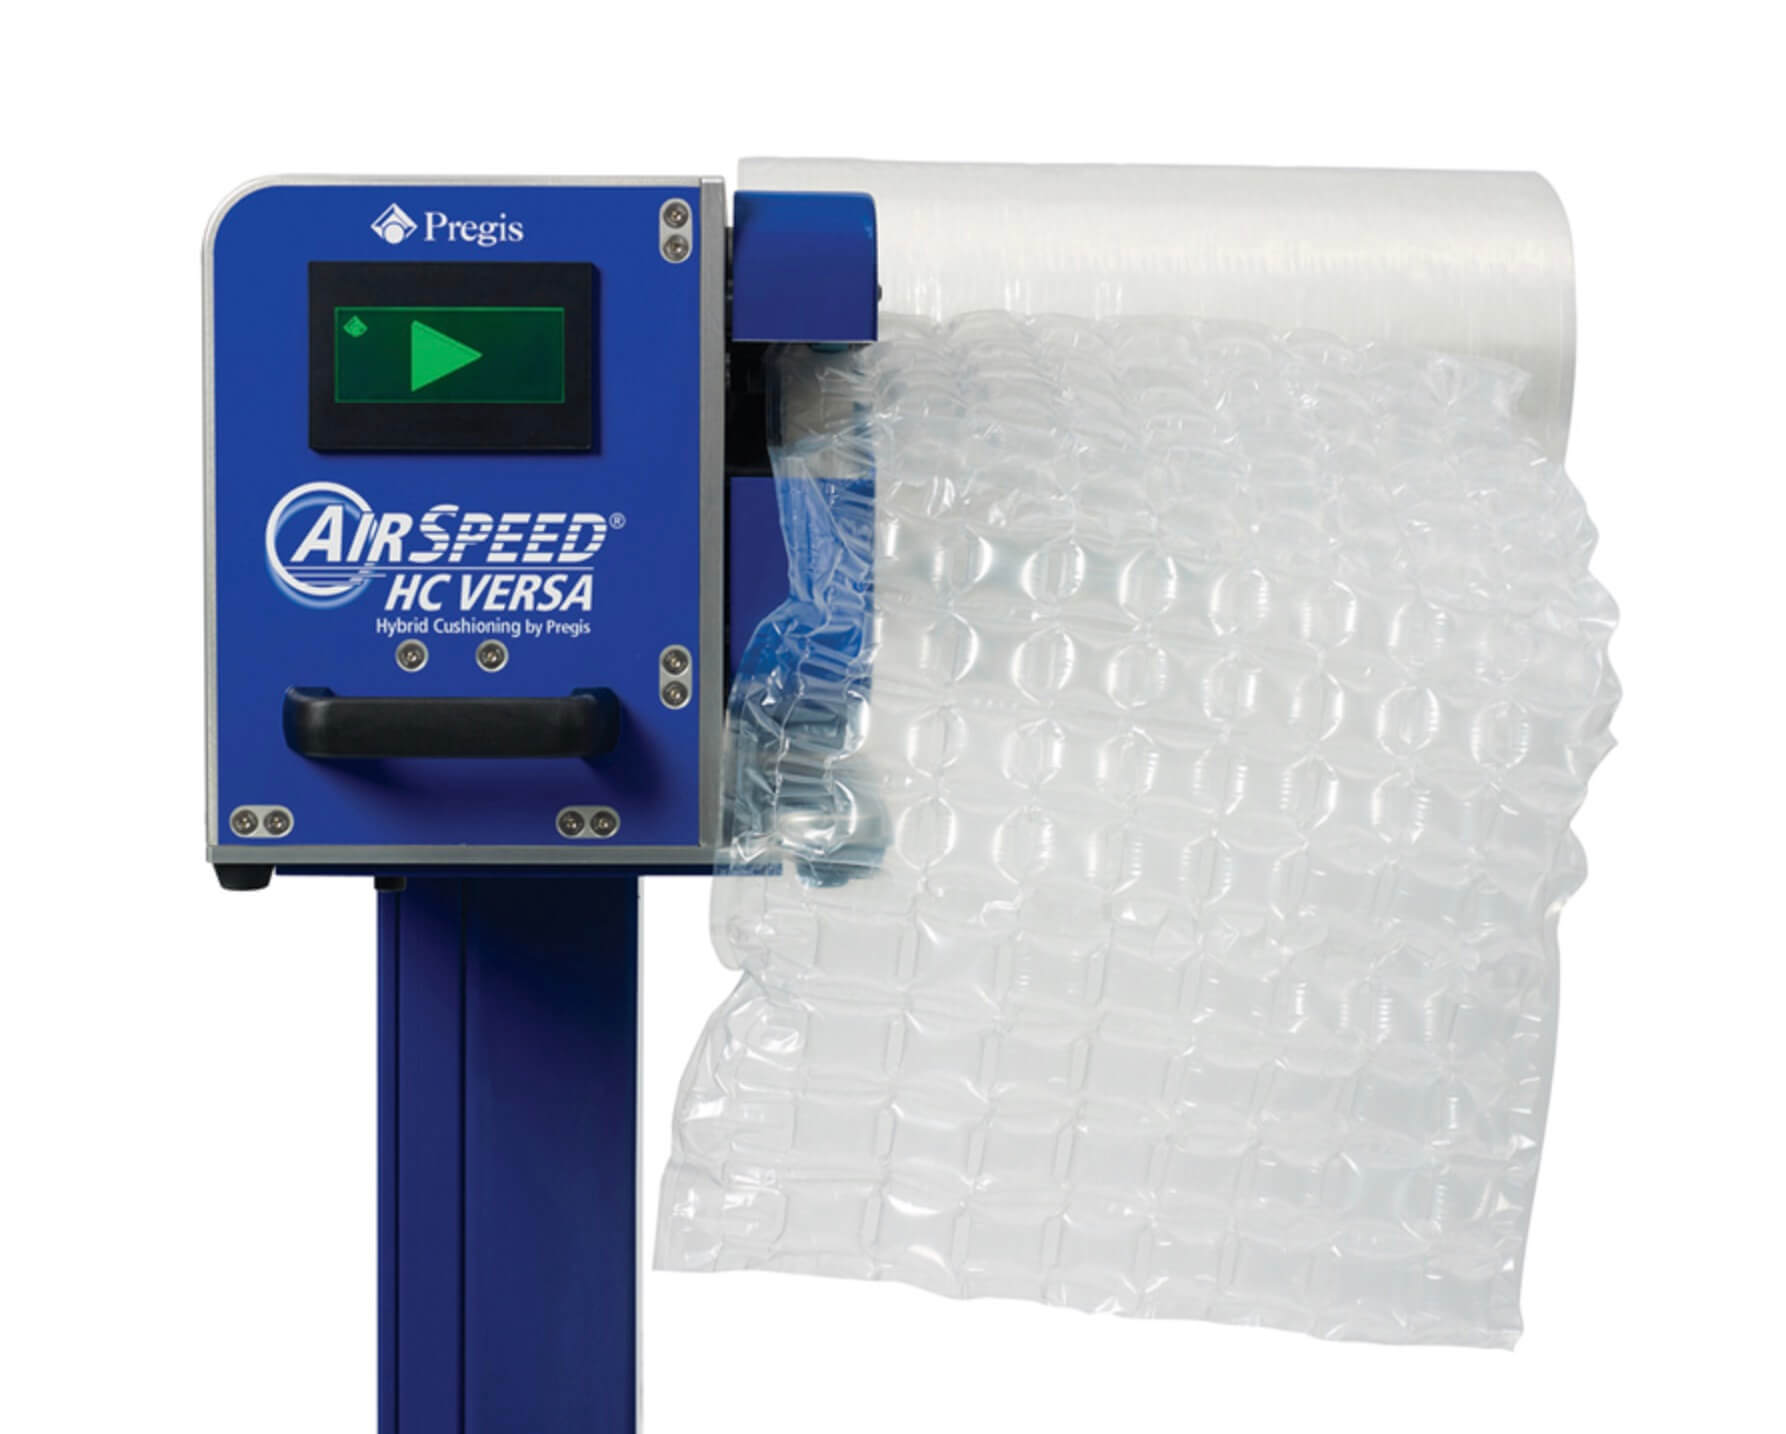 The Pregis AirSpeed HC Versa air cushioning packaging system